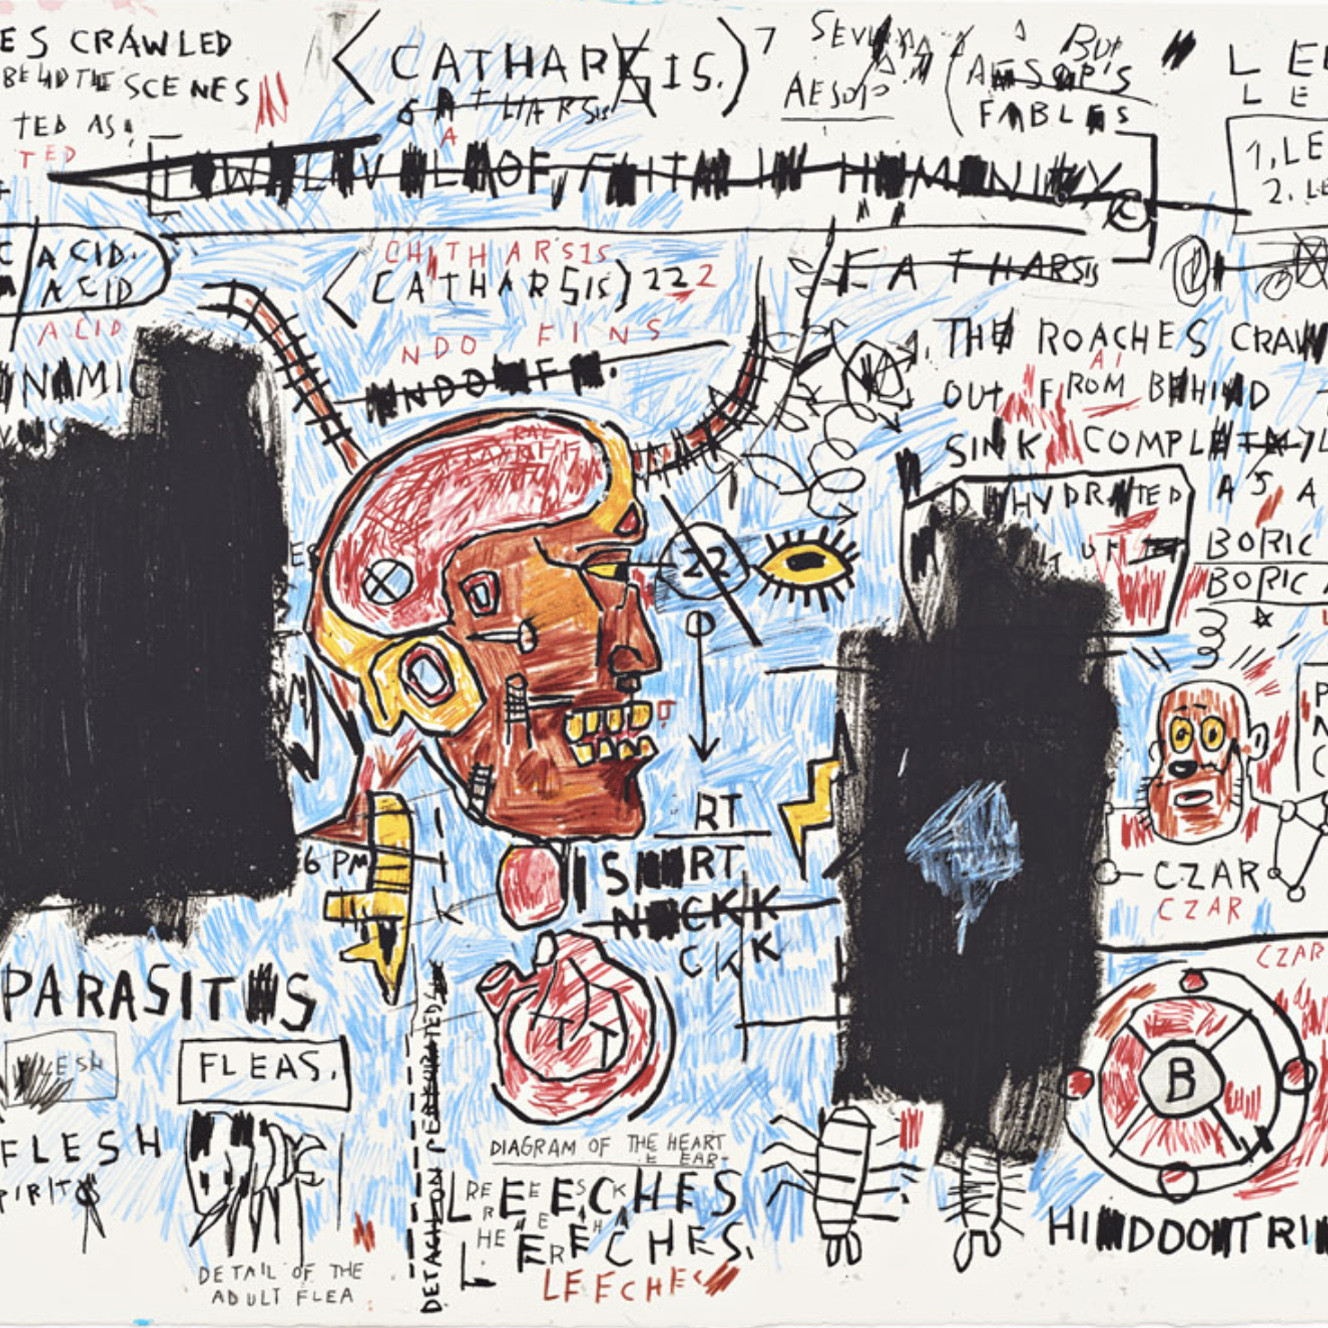 Leeches by Basquiat